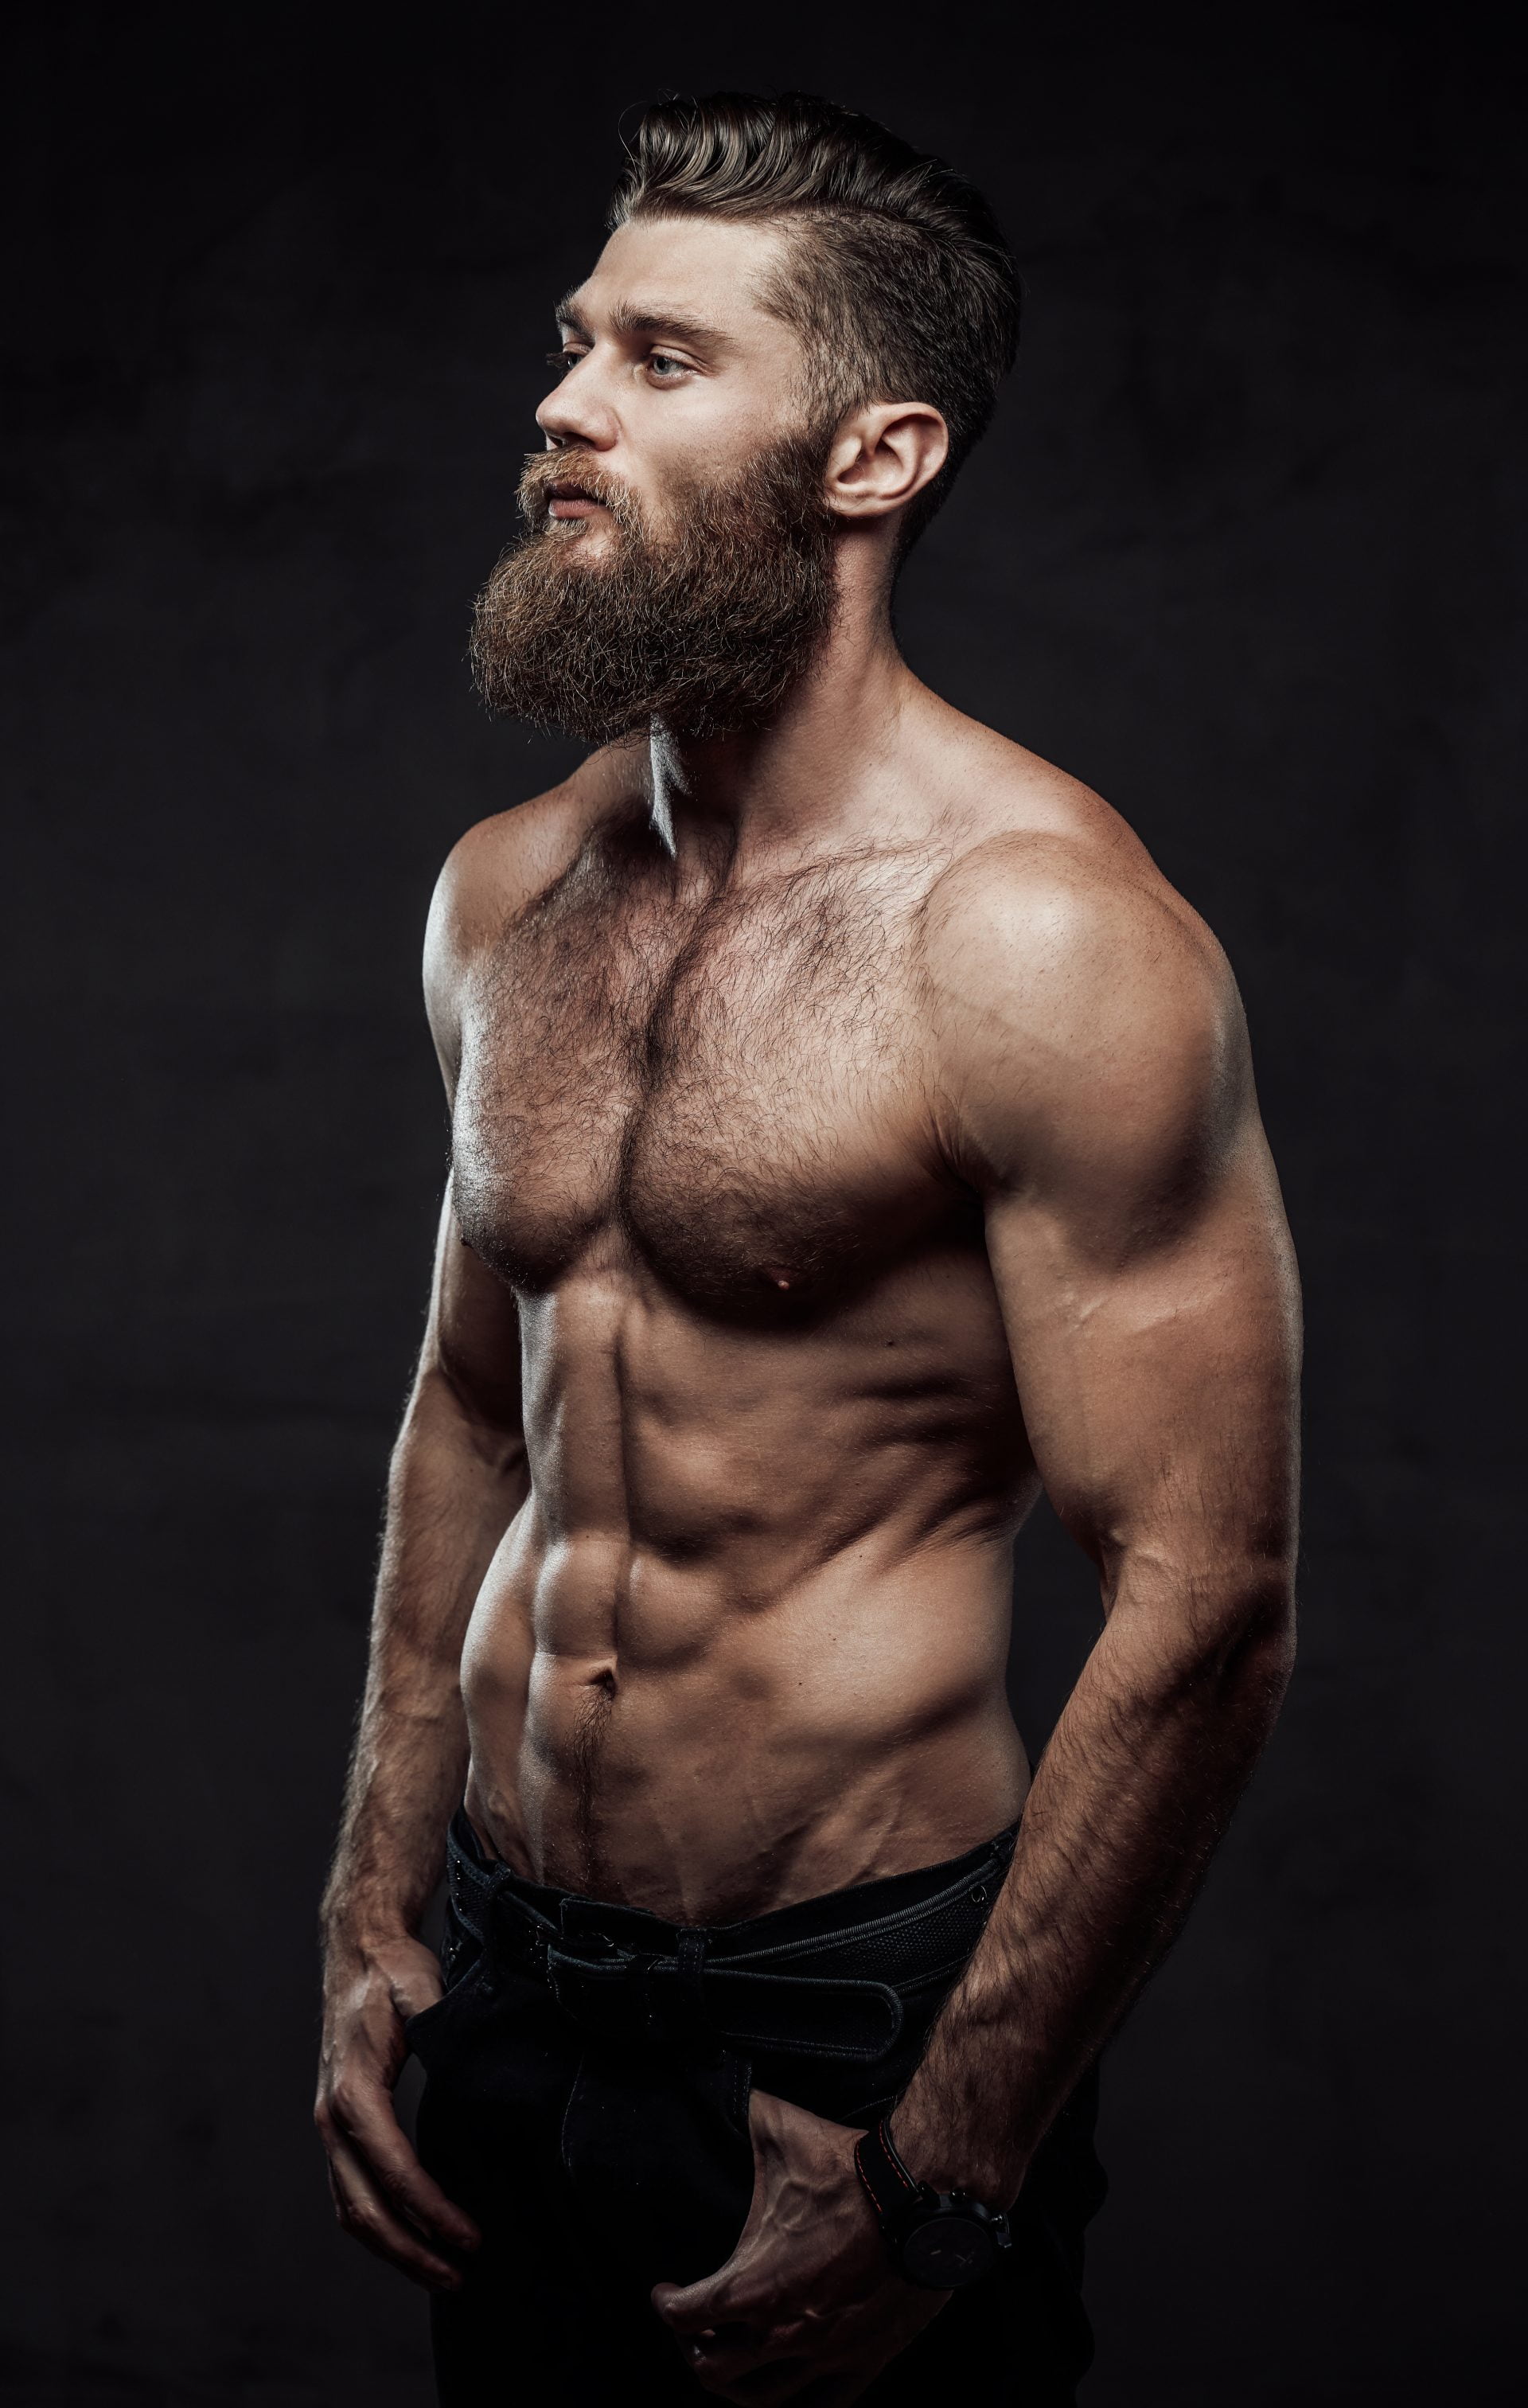 Bearded guy with naked torso posing in dark background